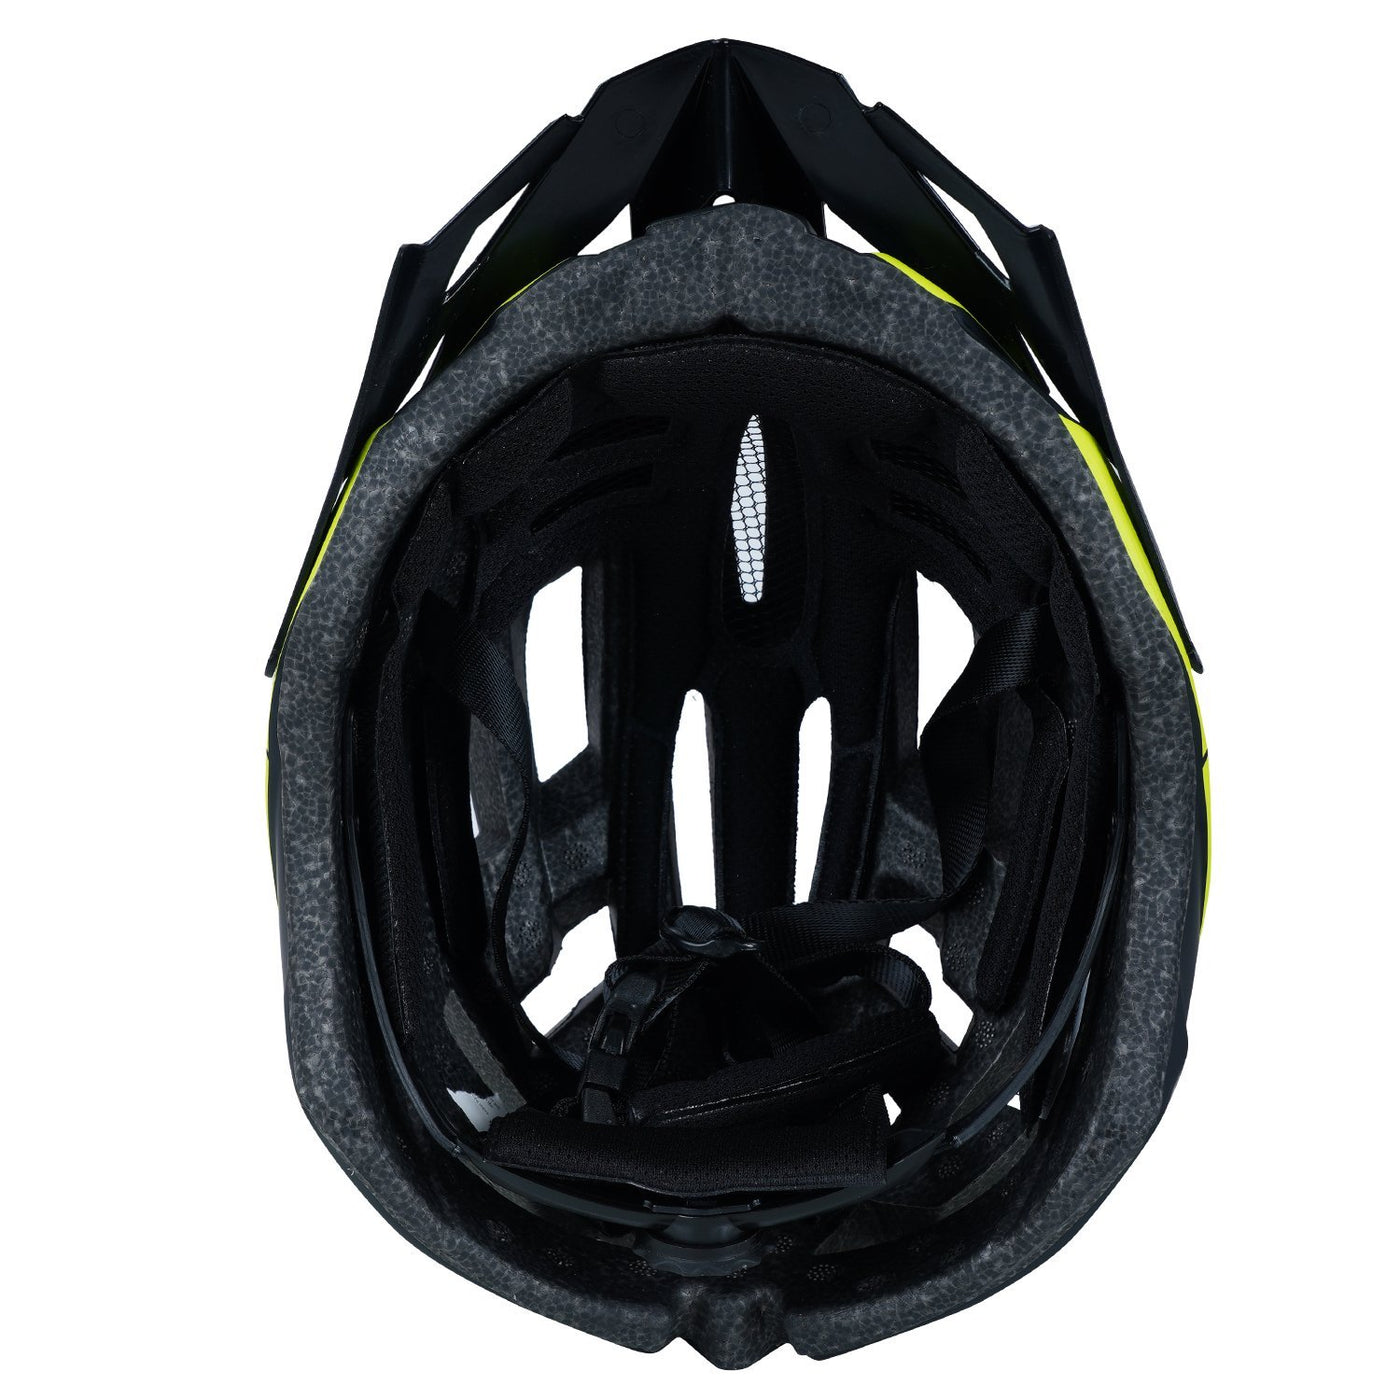 Zakpro Uphill MTB Cycling Helmet (Black)